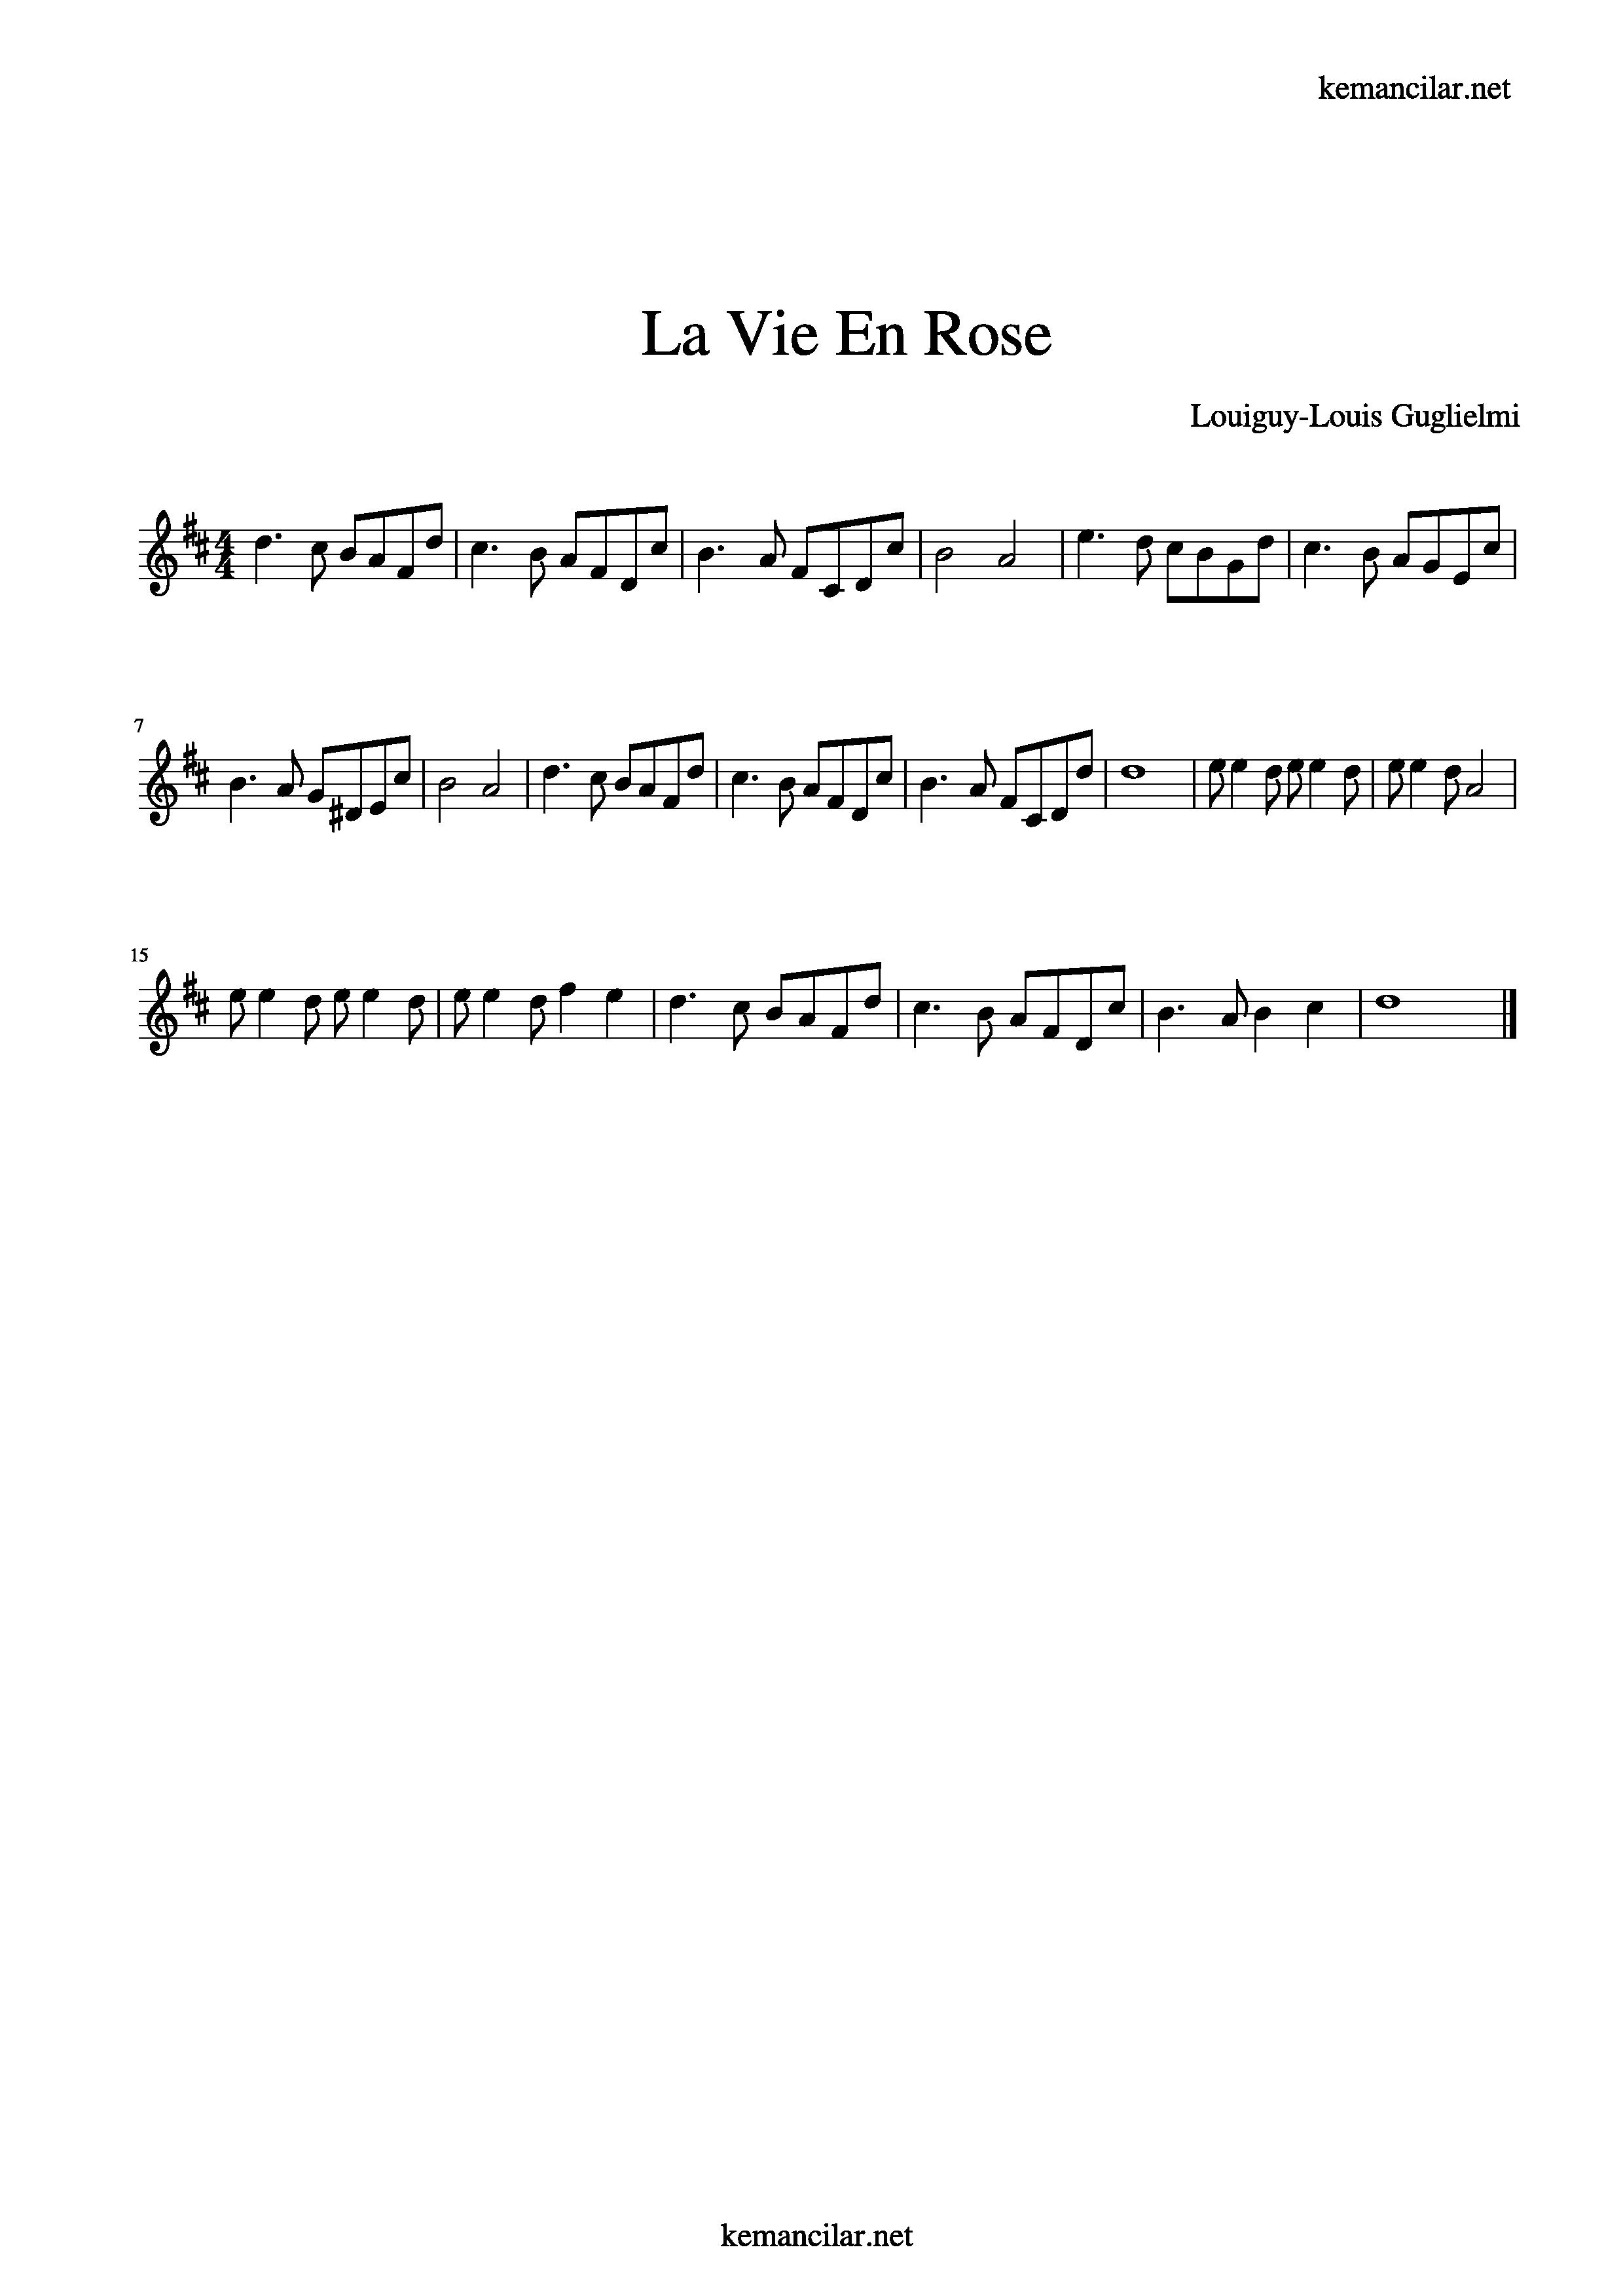 La Vie En Rose Chords La Vie En Rose Violin Sheet Music Free Sheet Music